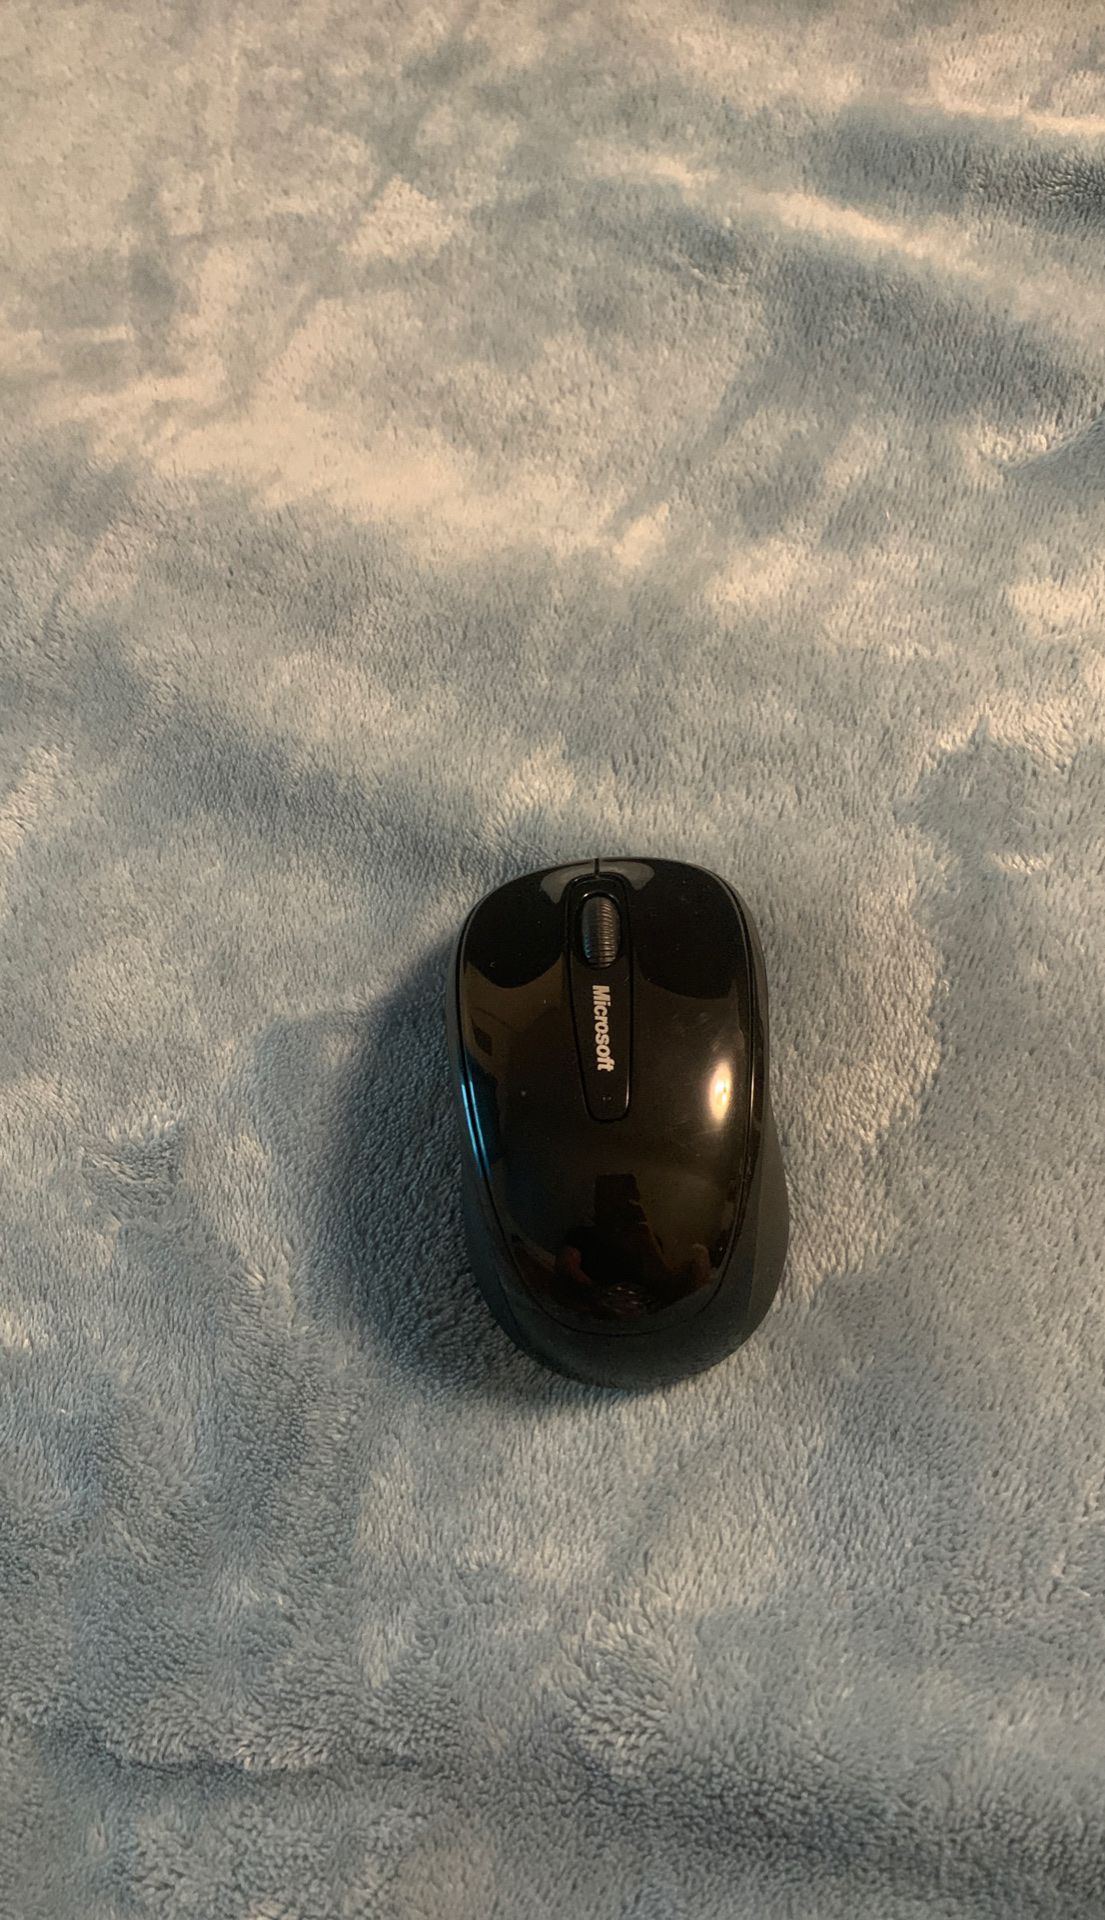 Wireless Microsoft Mouse.